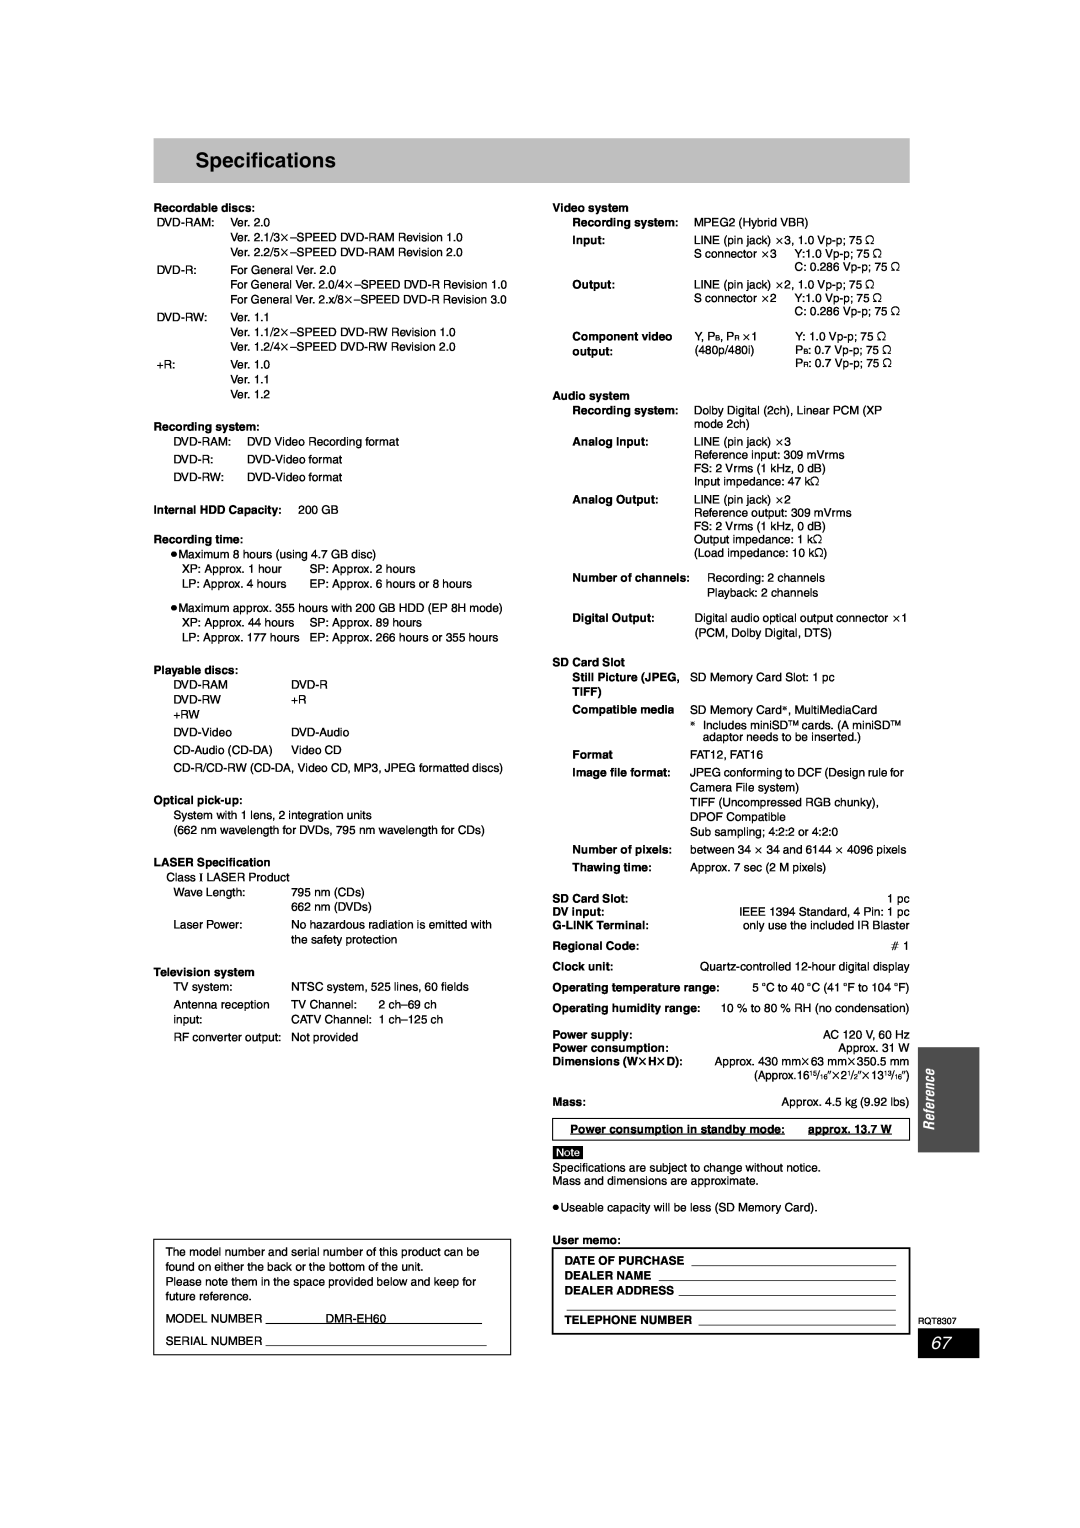 Panasonic DMR-EH60 warranty Specifications 